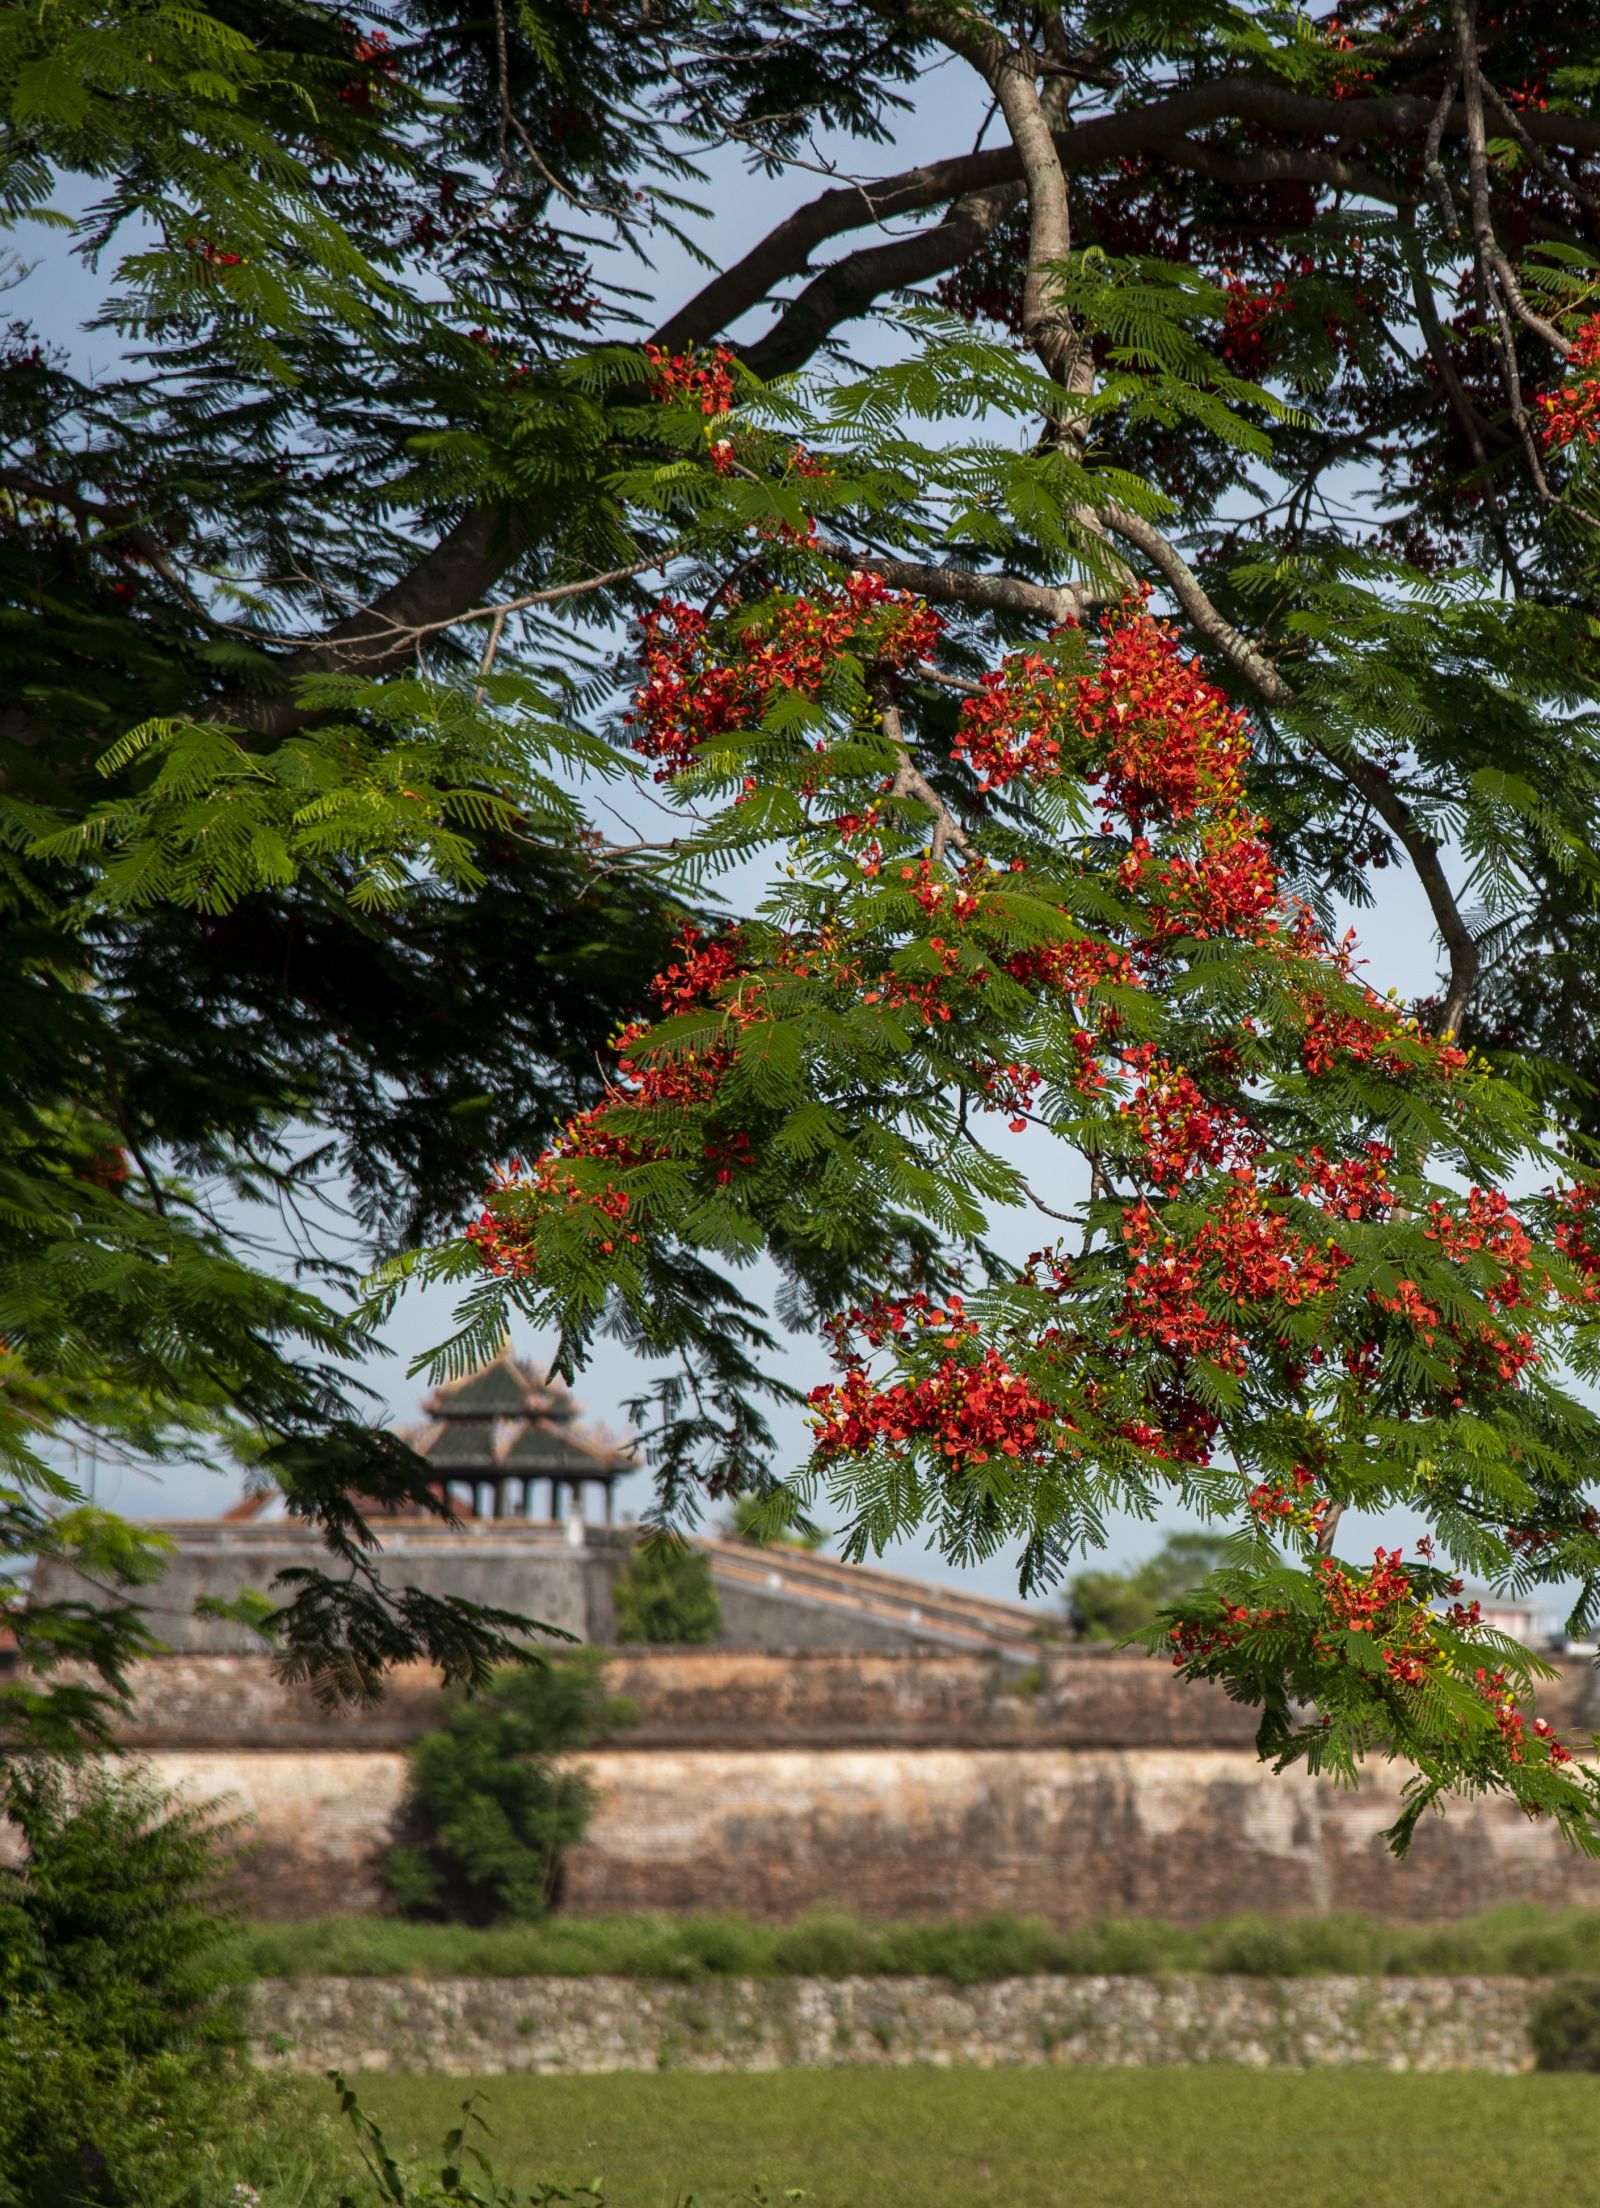 Flamboyant flowers blooming along the Hue Citadel moats